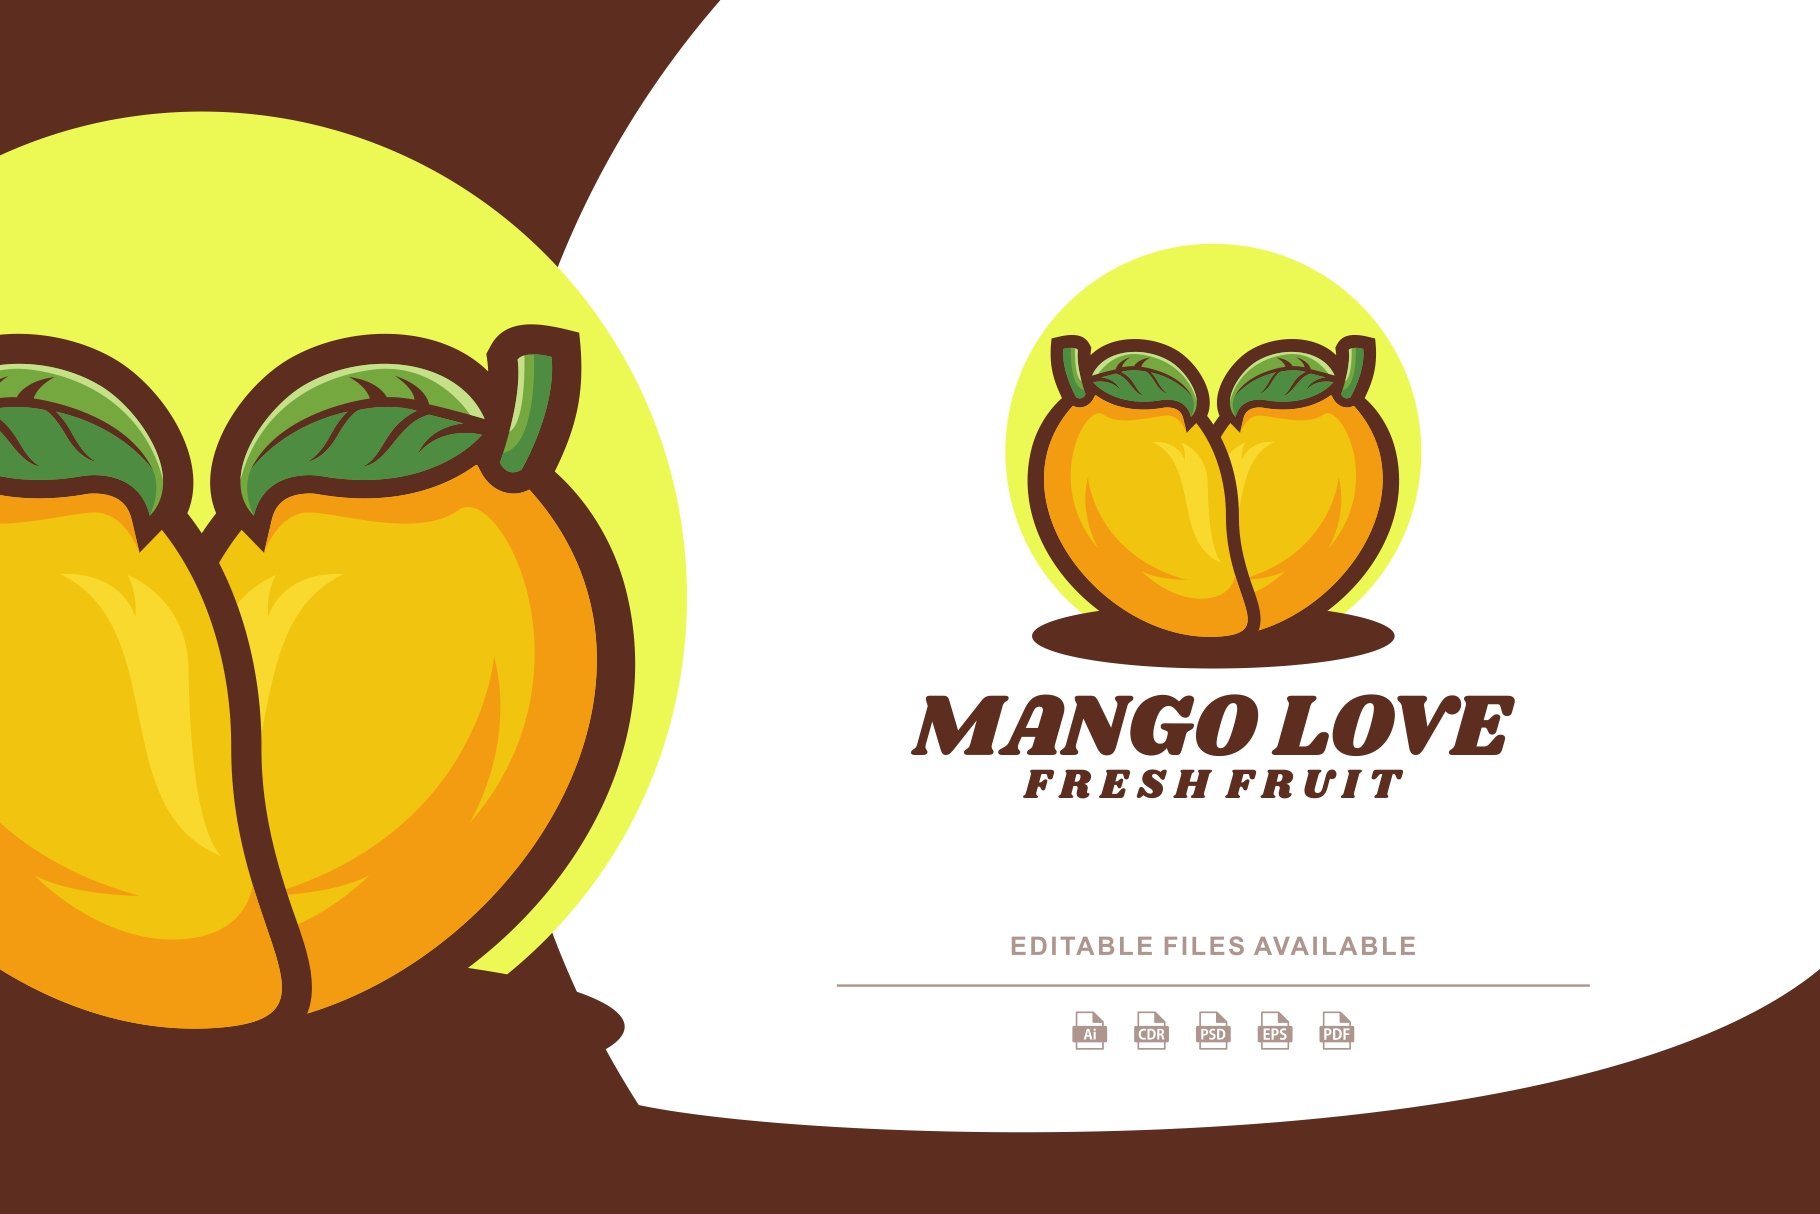 Mango Love Simple Mascot Logo cover image.